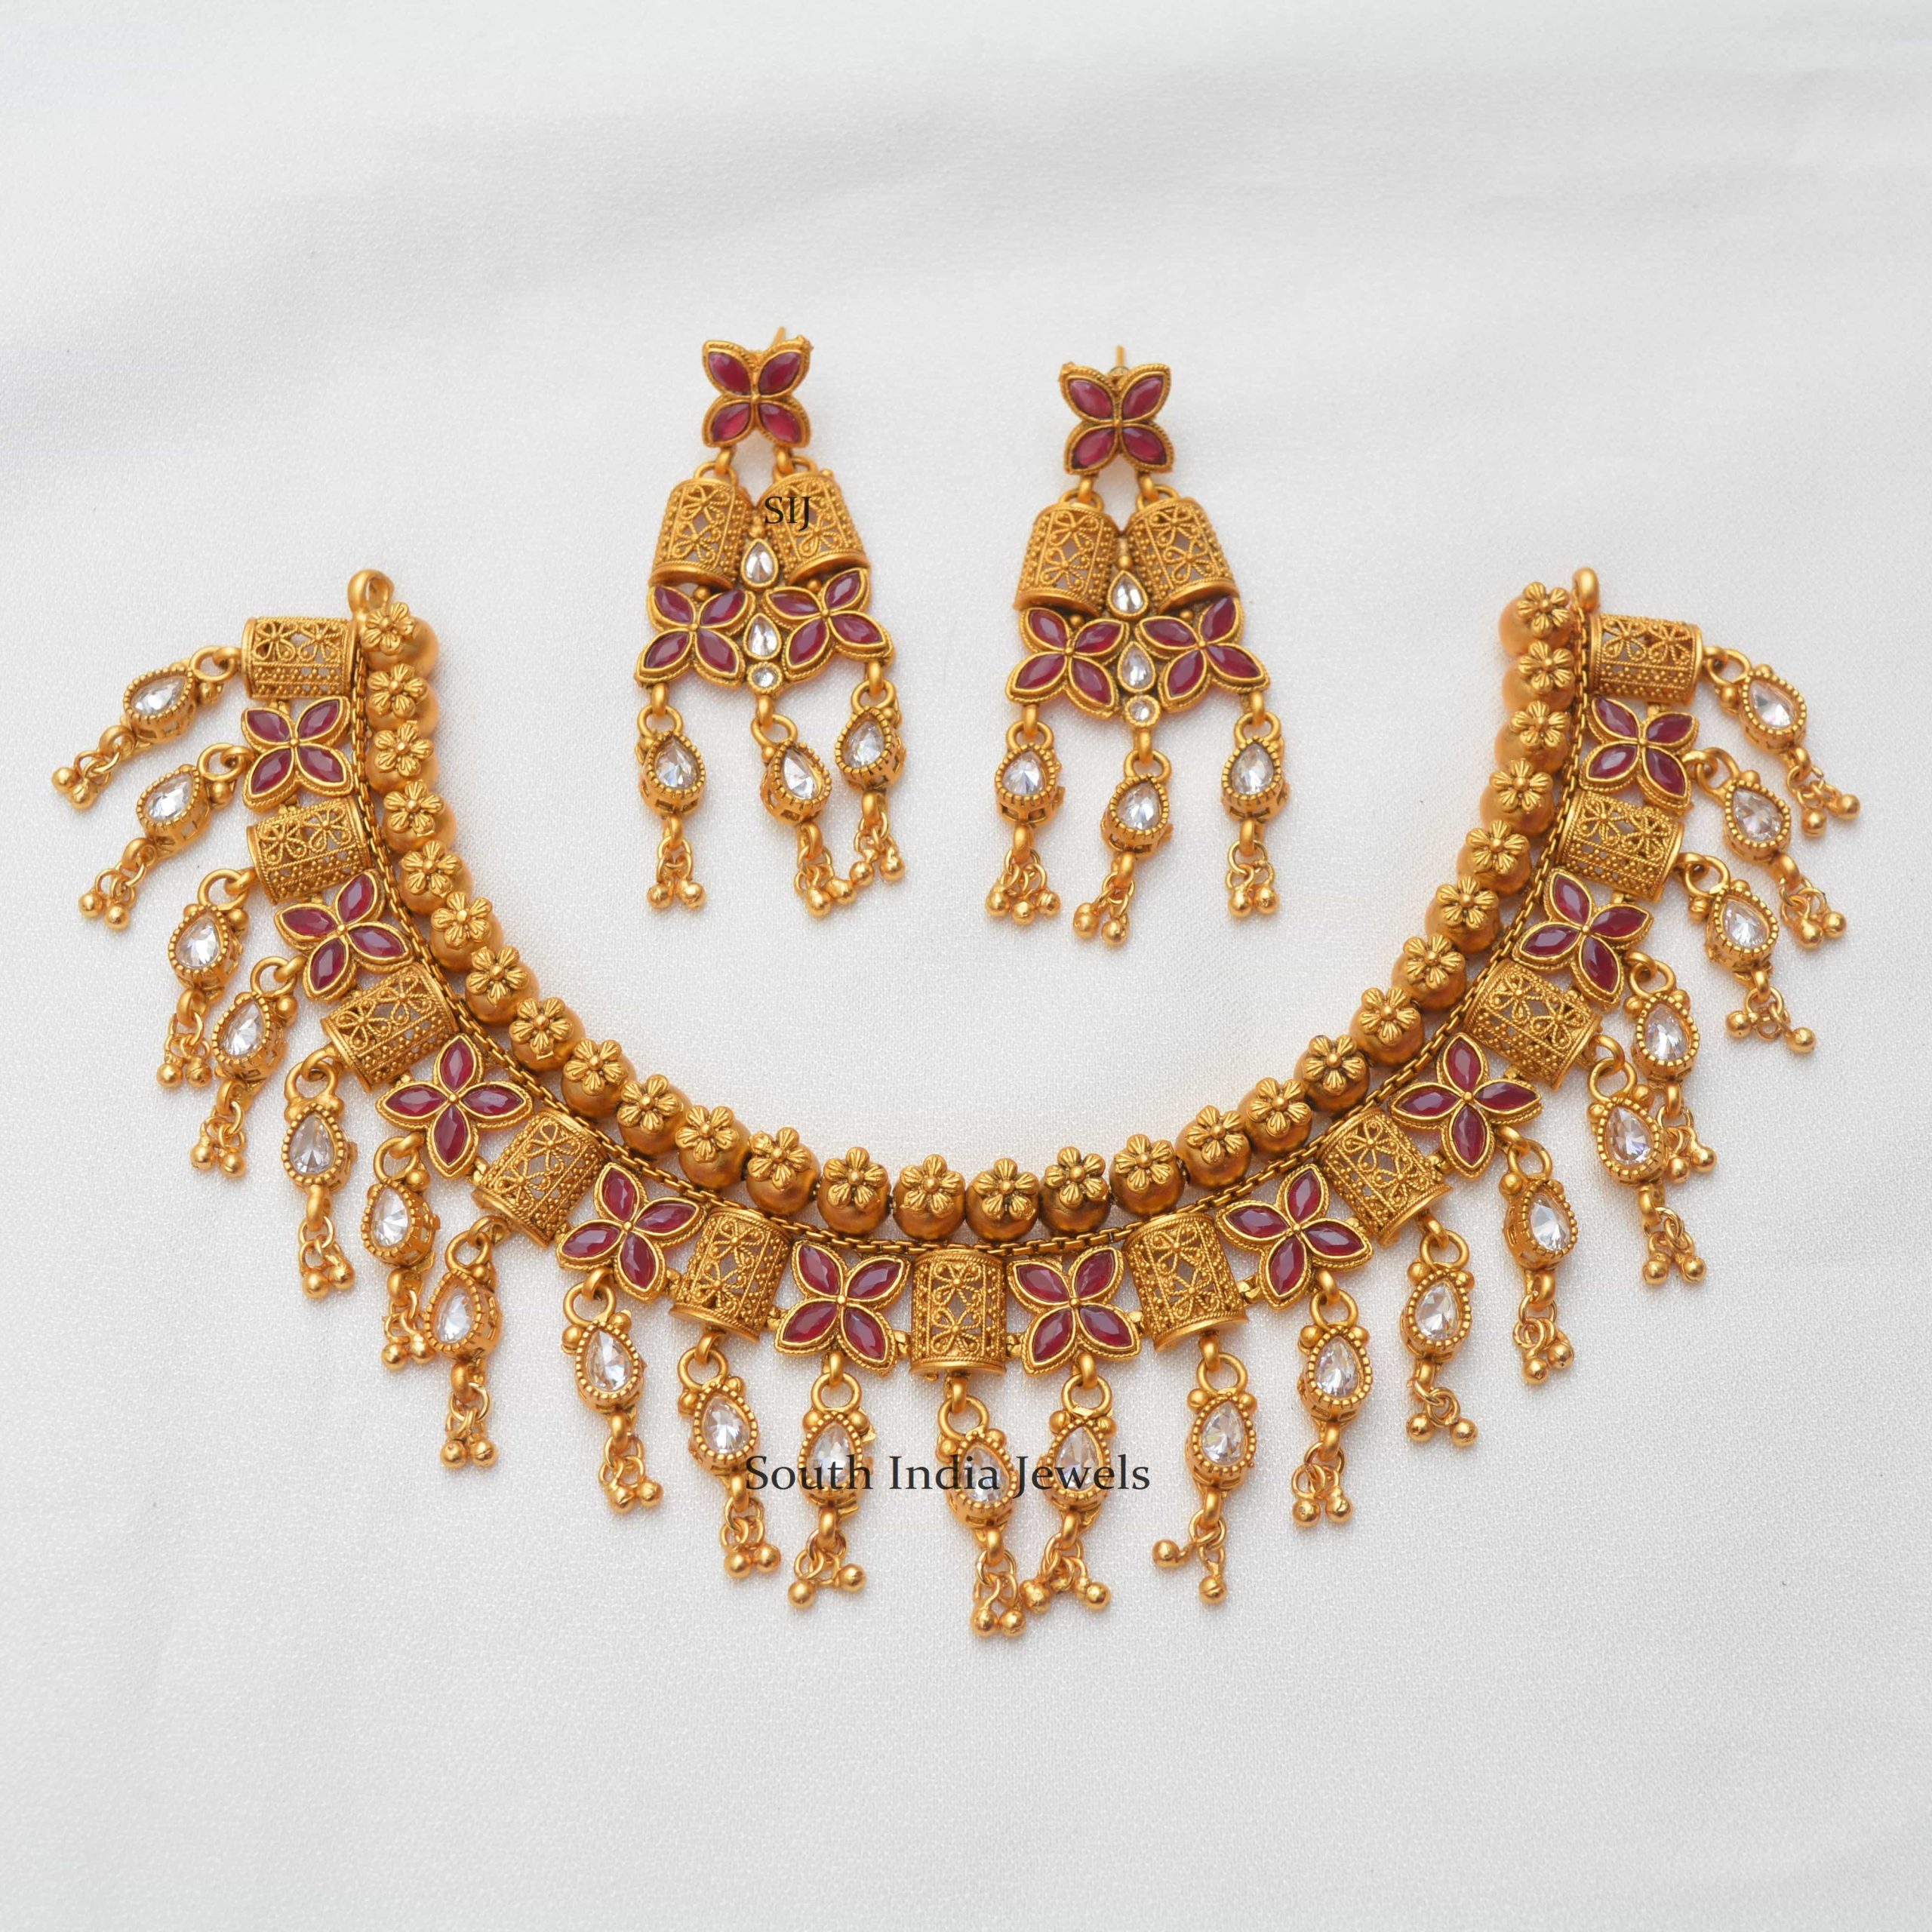 Antique Floral Design Necklace - South India Jewels